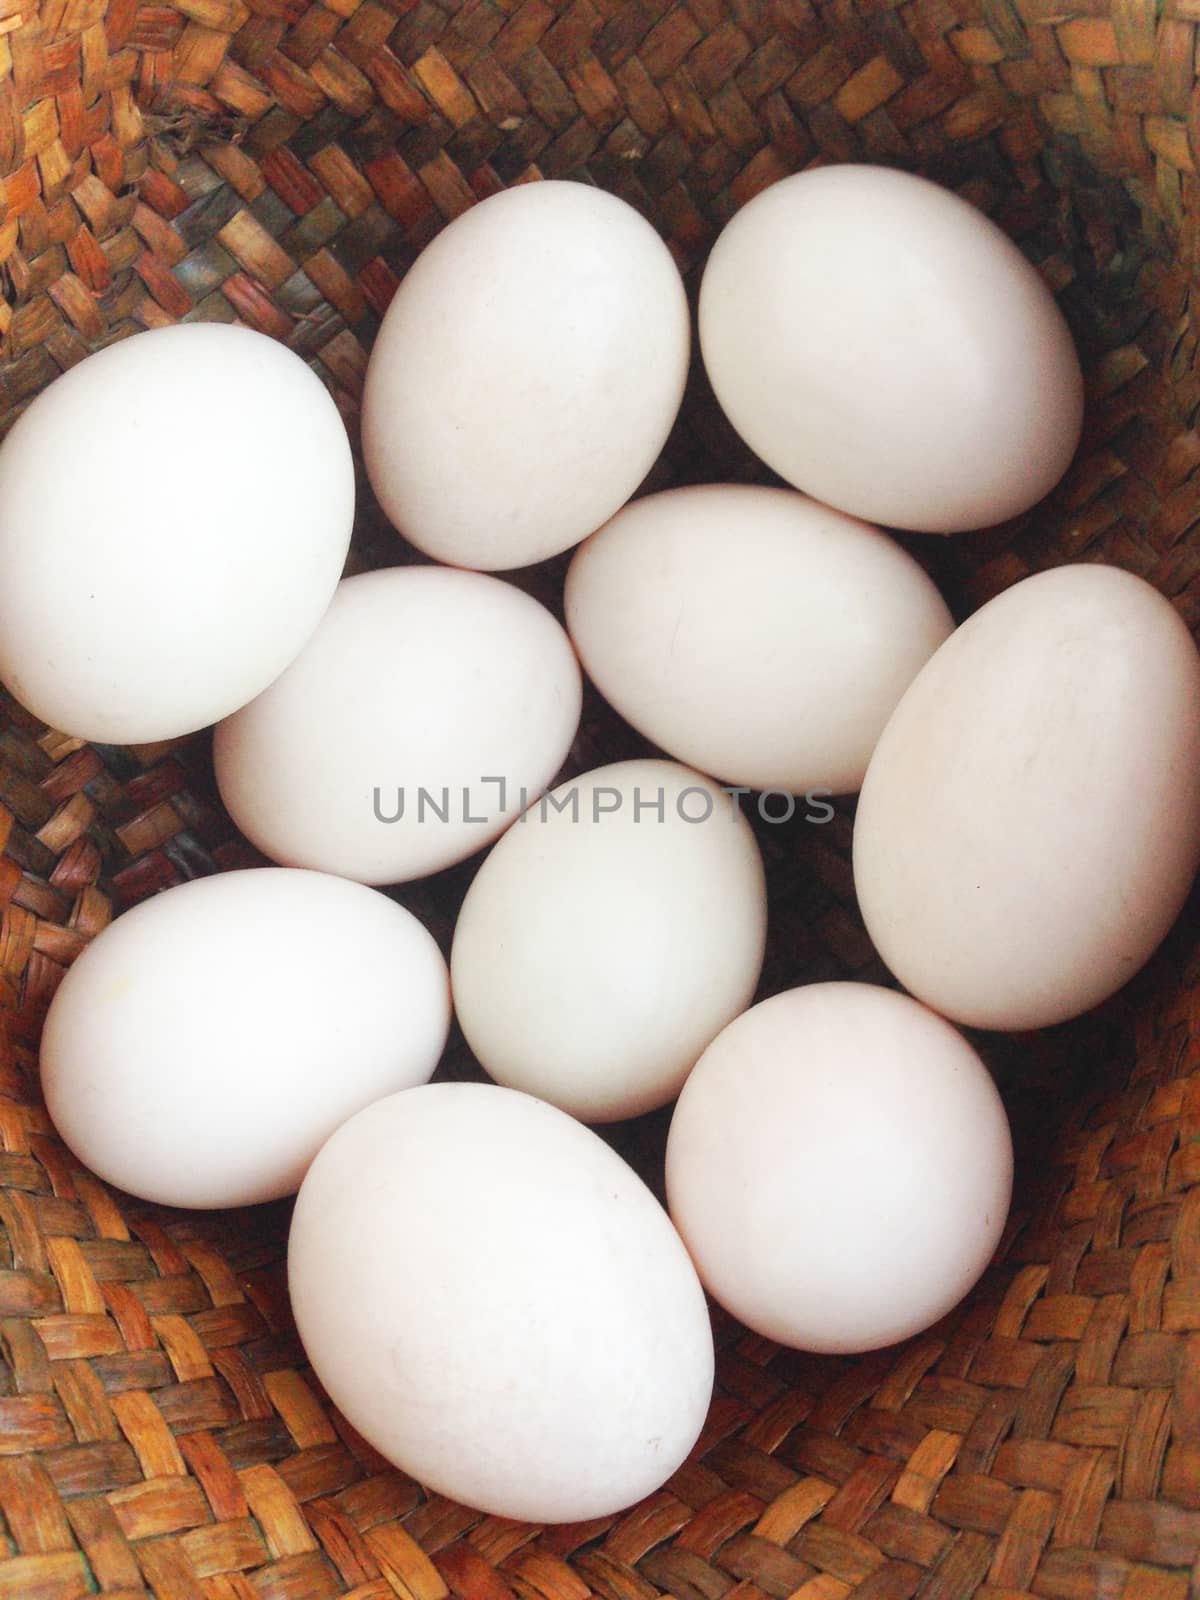 duck eggs on basket